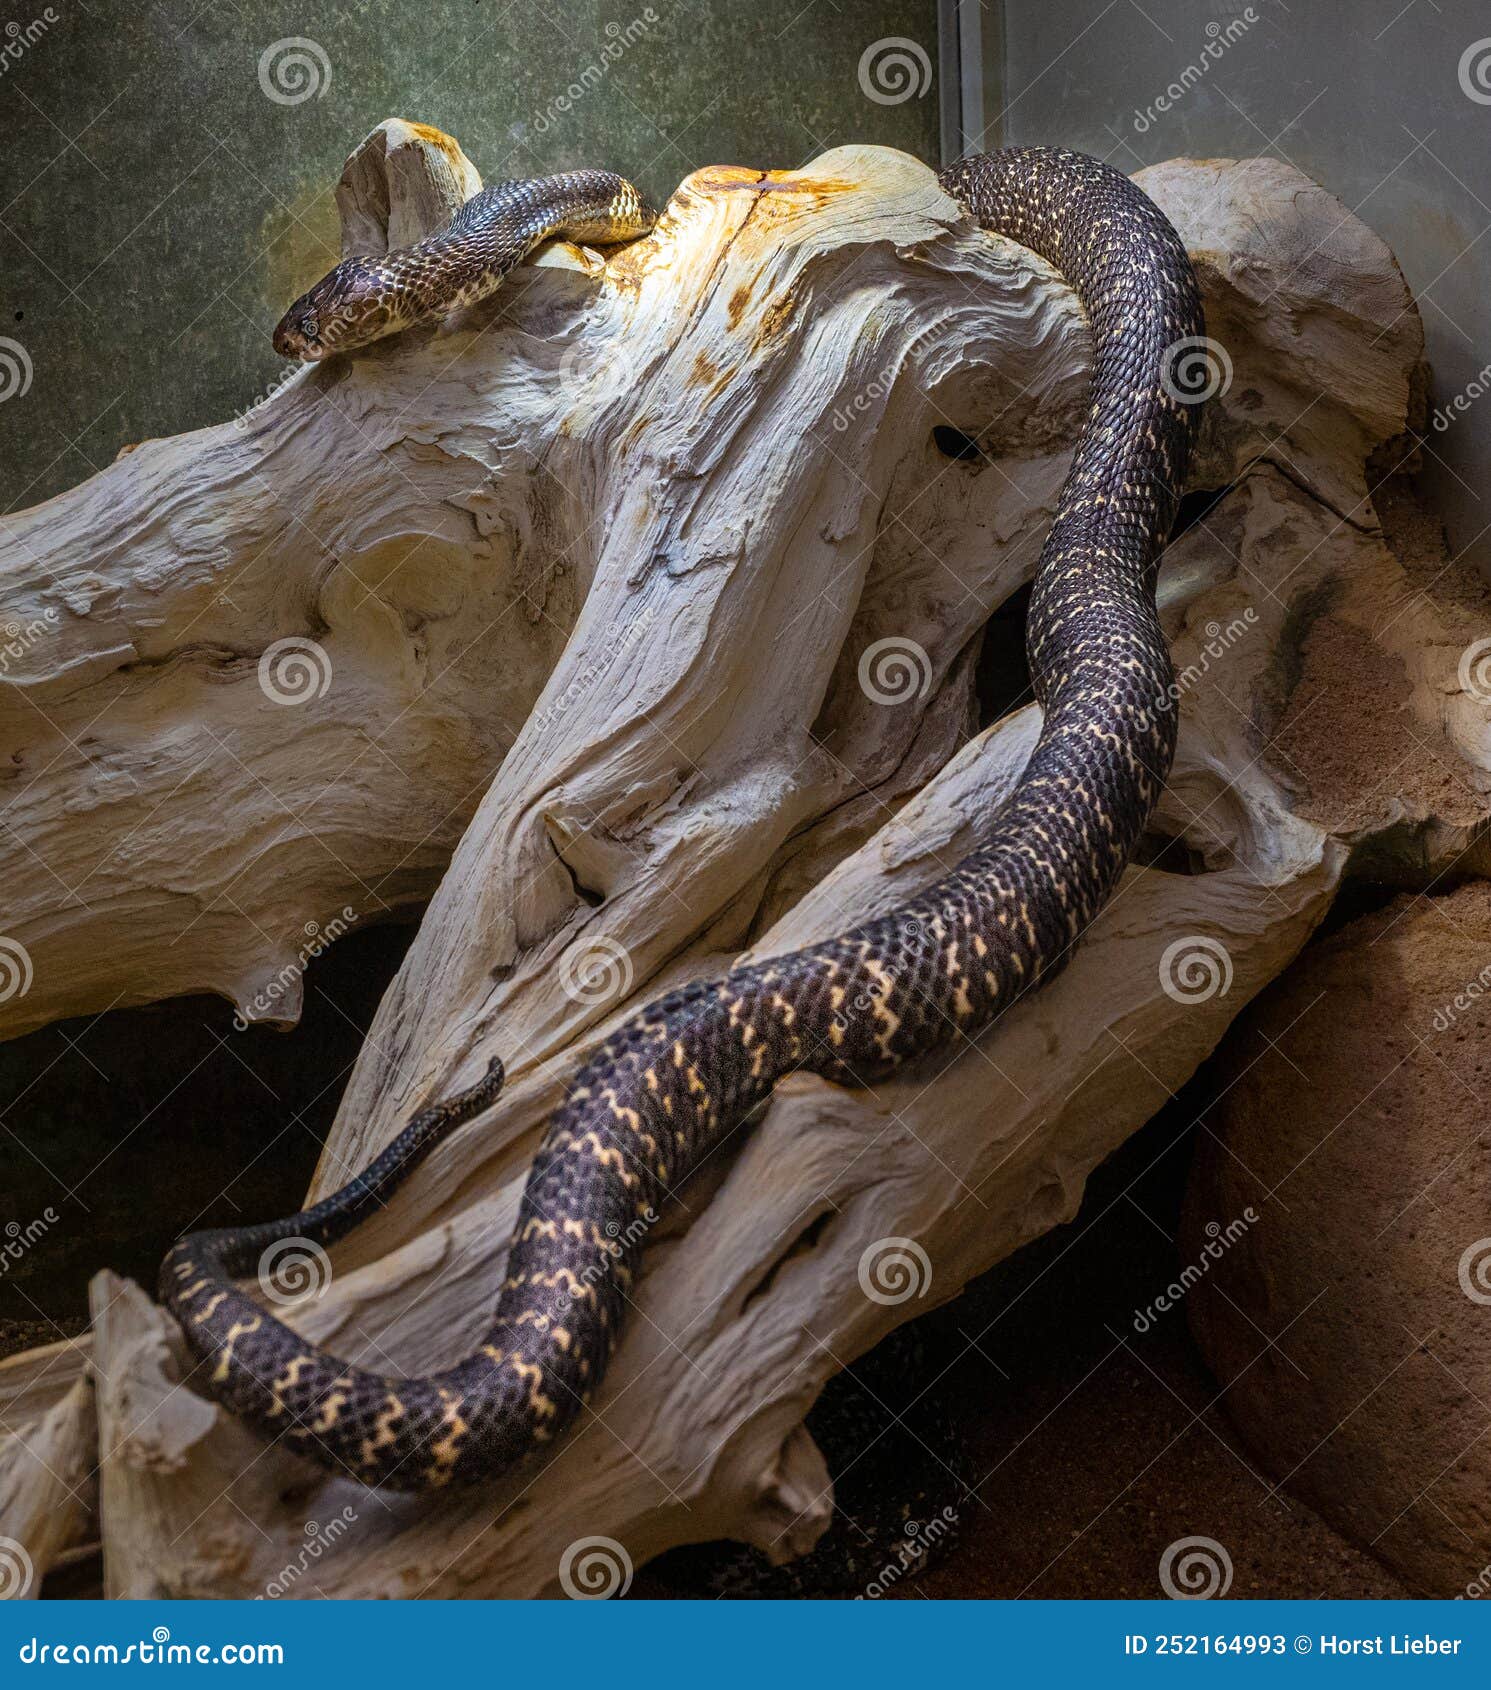 indian or spectacled cobra naja naja naja is a genus of venomous elapid snakes. wilhelma, stuttgart